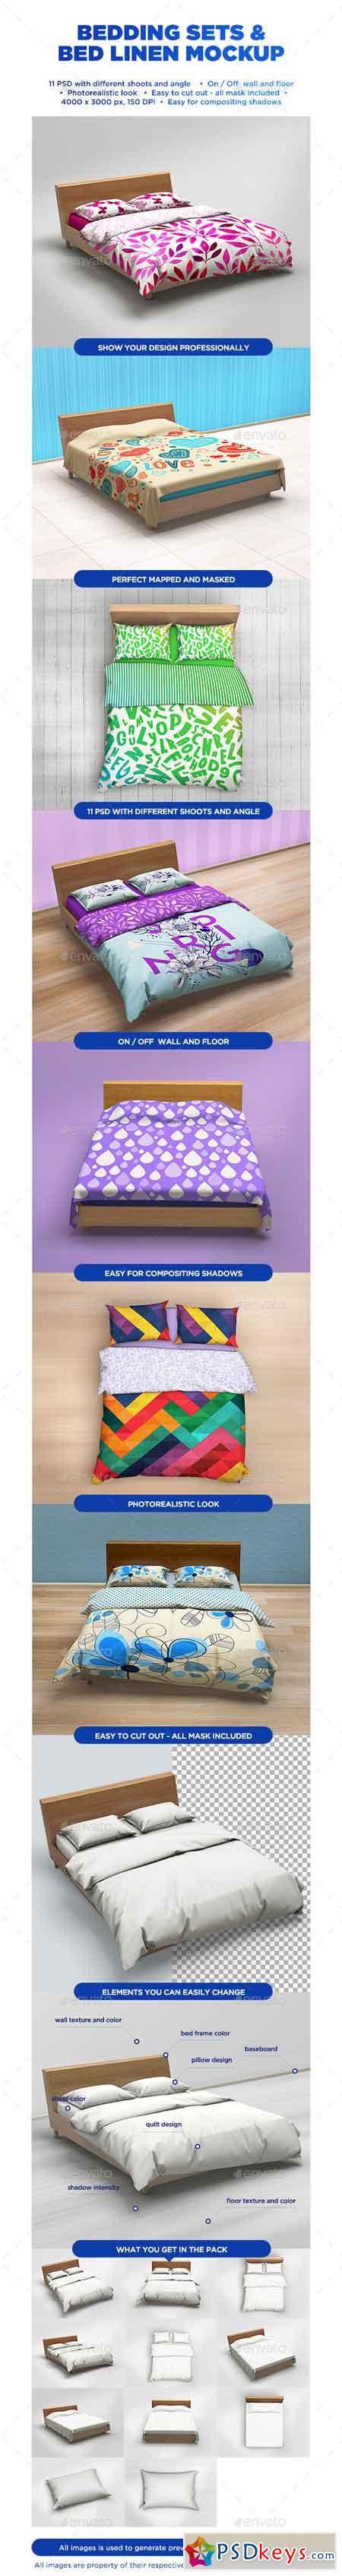 Download Bedding Sets & Bed Linen Mockup 12018429 » Free Download Photoshop Vector Stock image Via ...